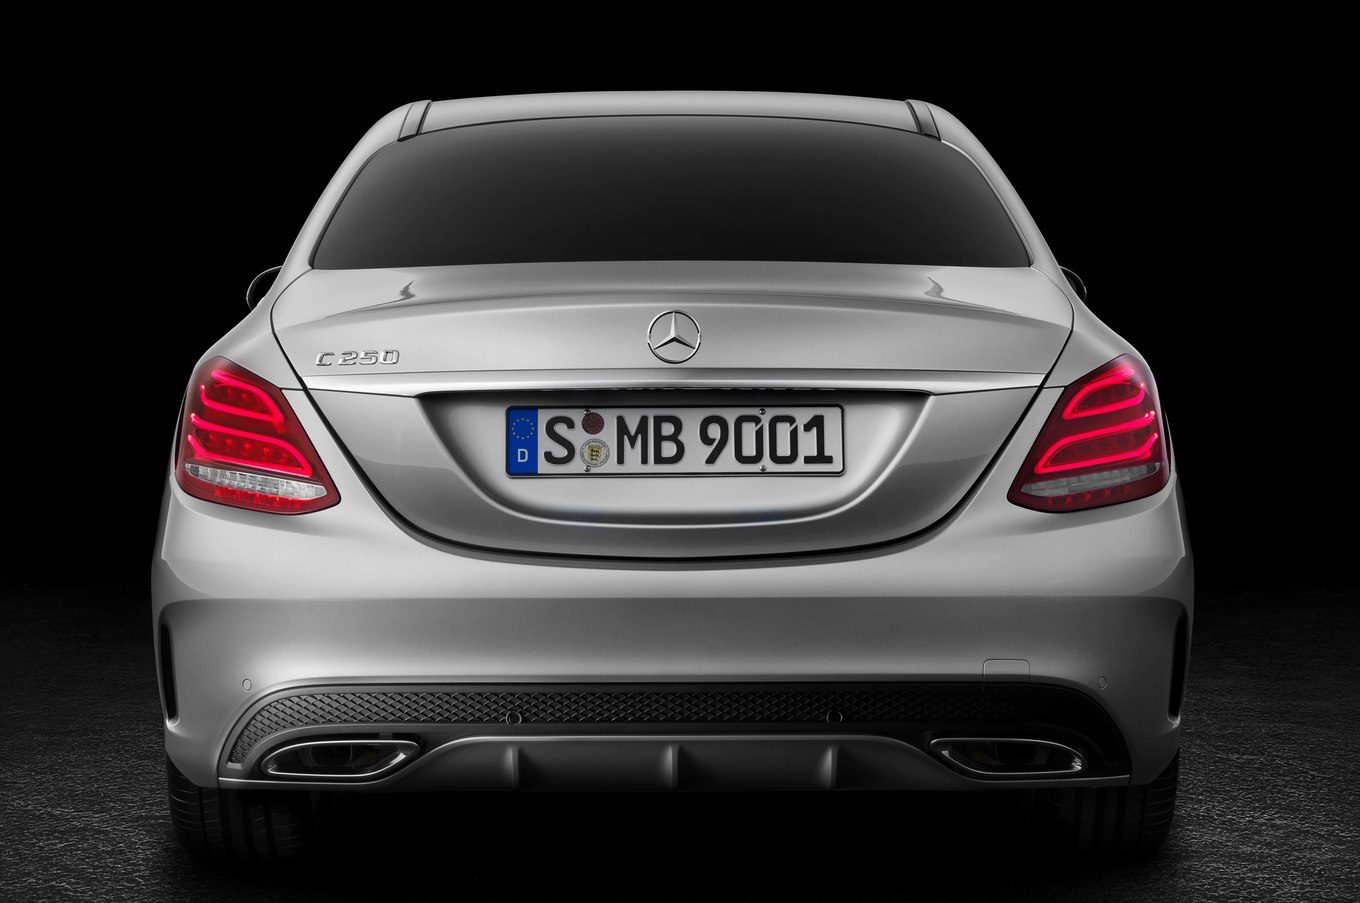 2015-Mercedes-Benz-C-Class-rear-profile.jpg